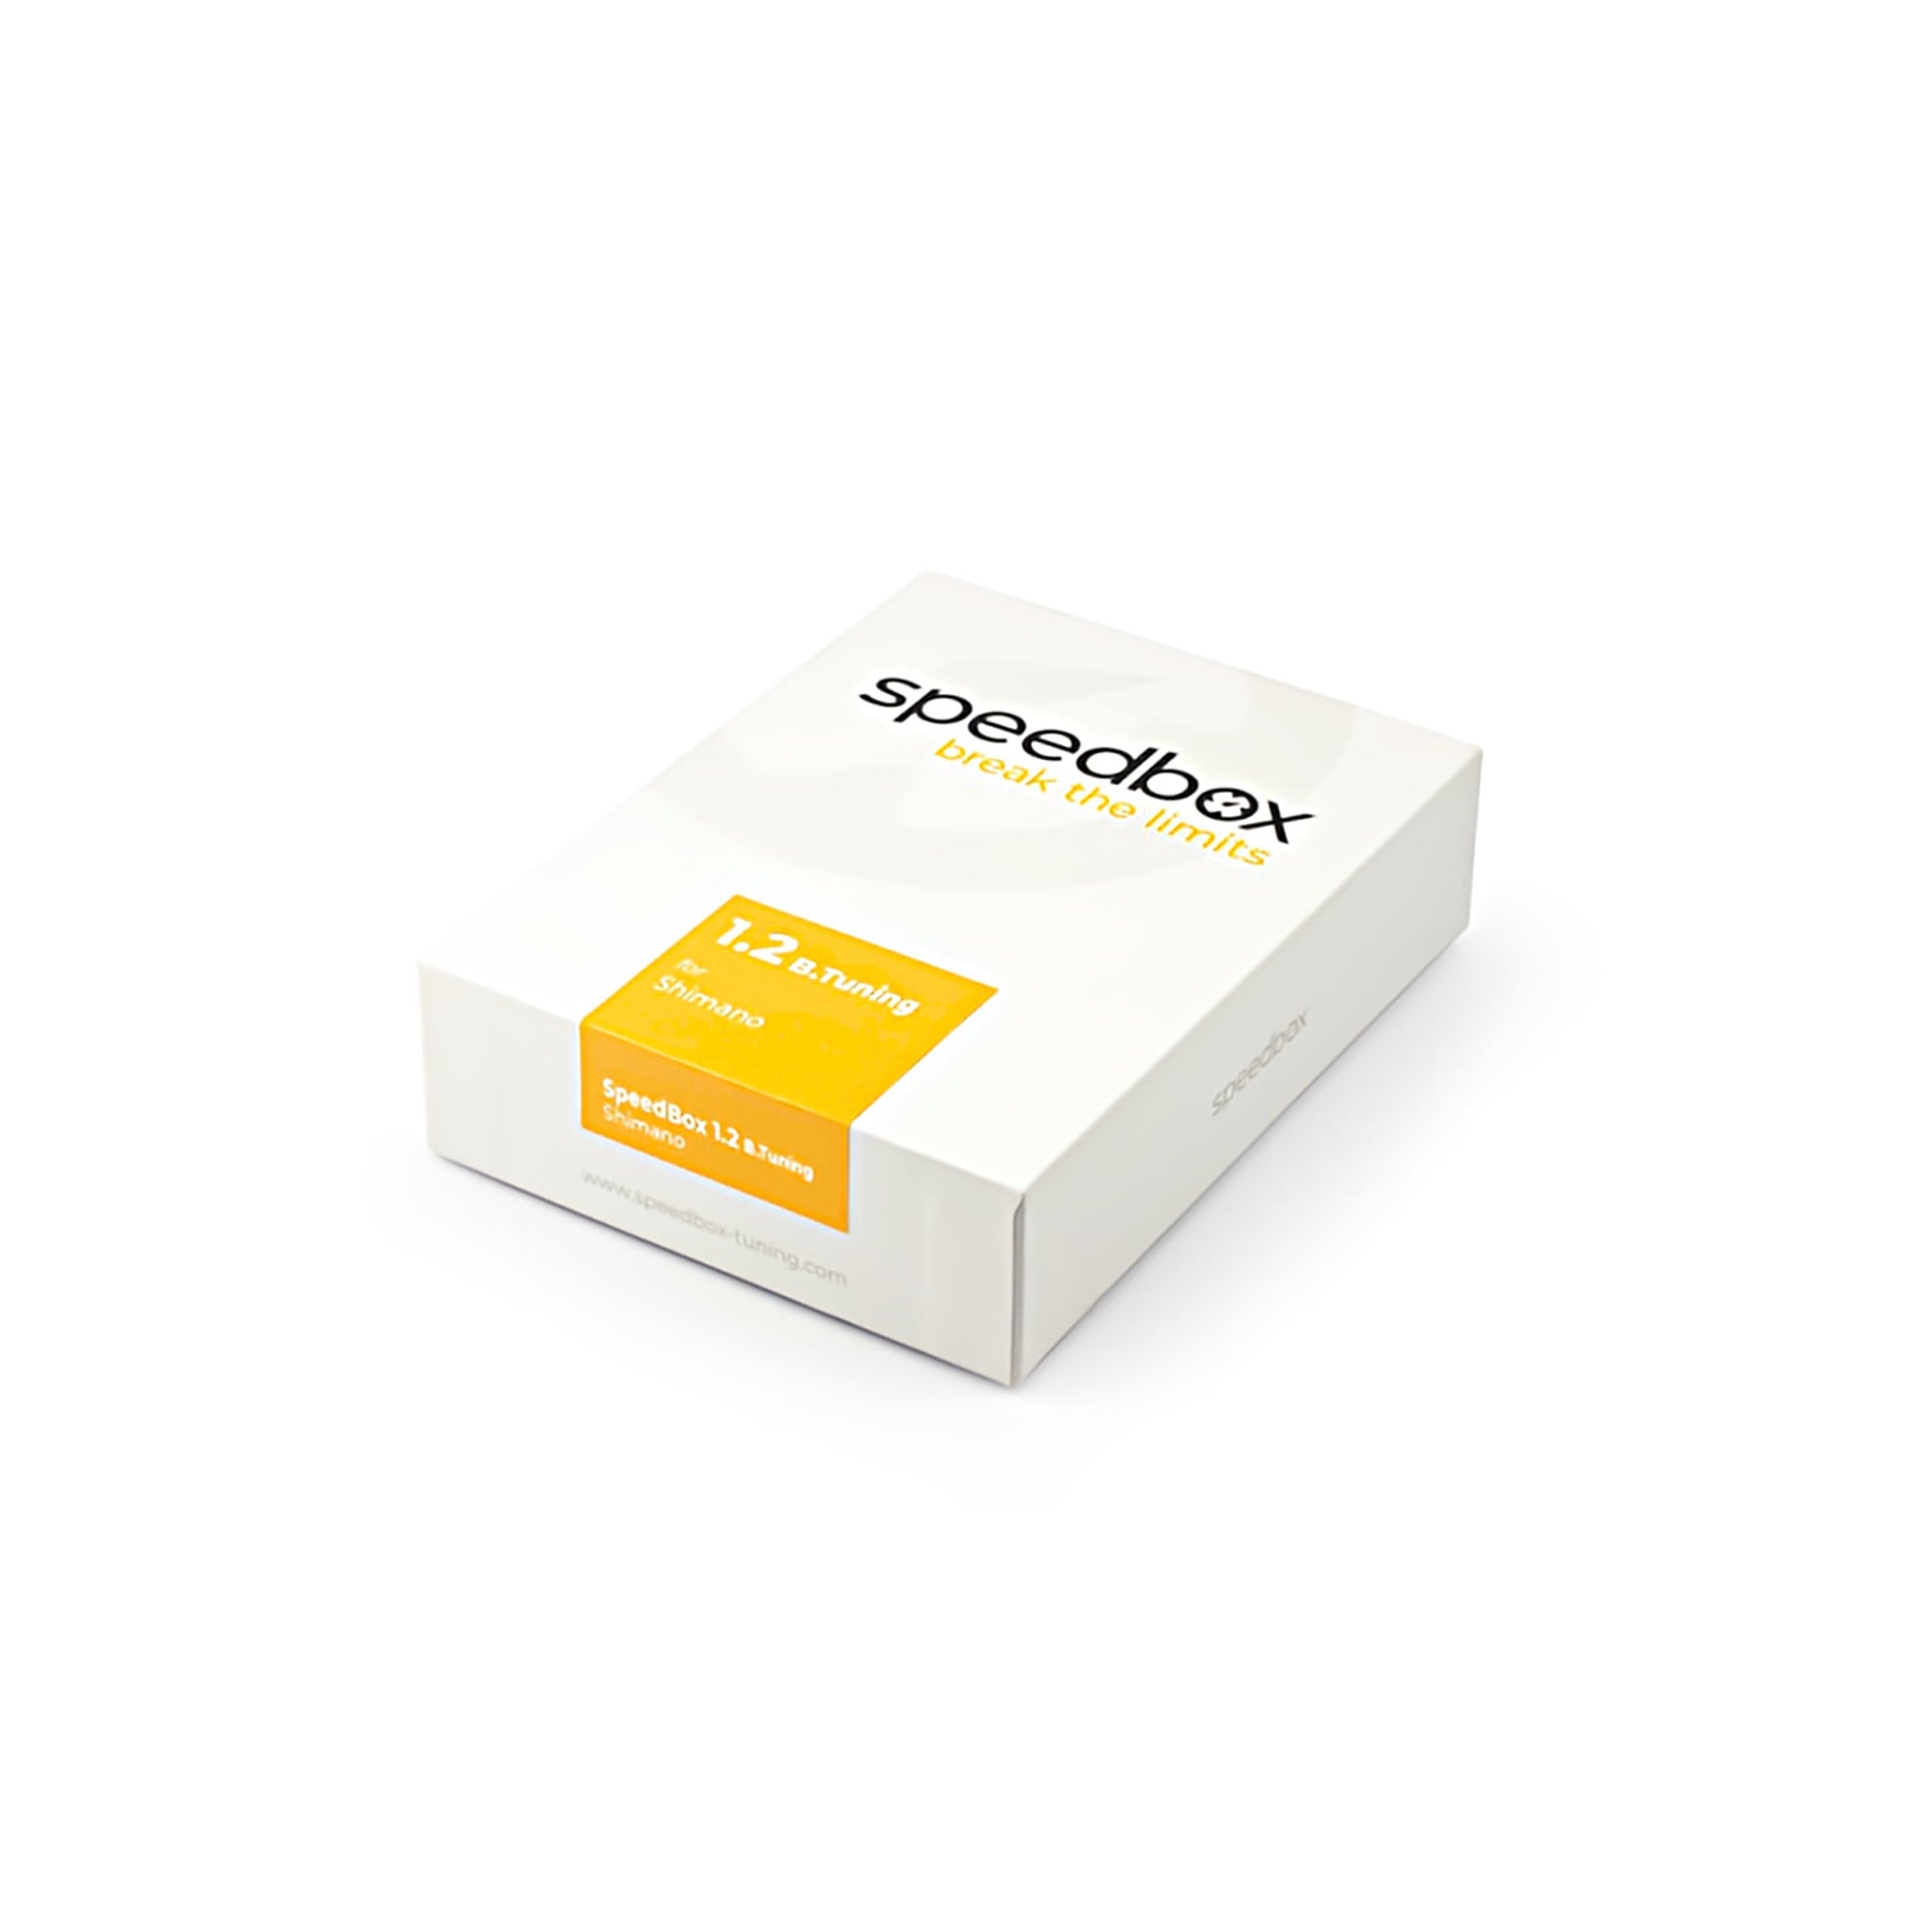 SpeedBox 1.2 B.Tuning for Shimano (E8000, E7000, E6100, E5000) - ebiketechnology